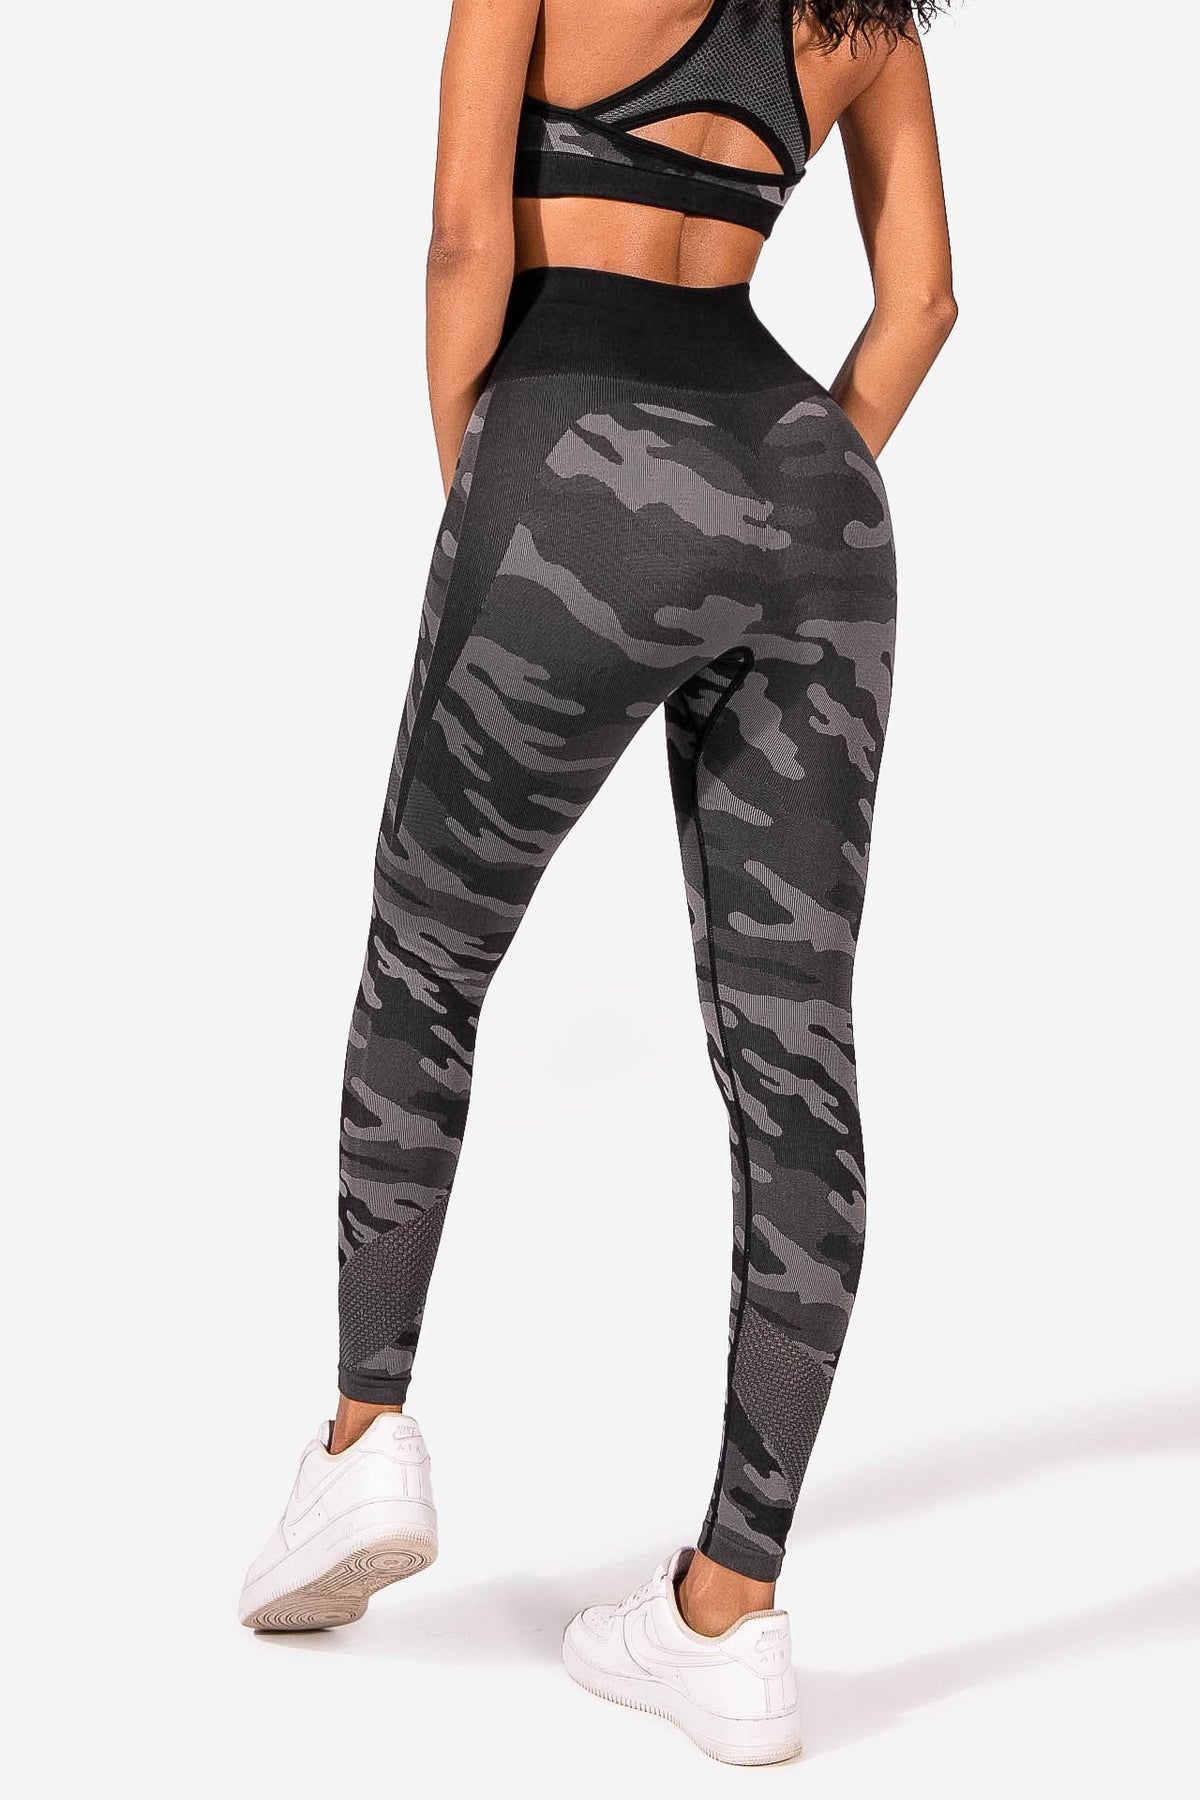 High Waist Ultra Soft Lightweight Black Camo Capris High Rise Yoga Pants -  China Yoga Pants and Fitness Pants price